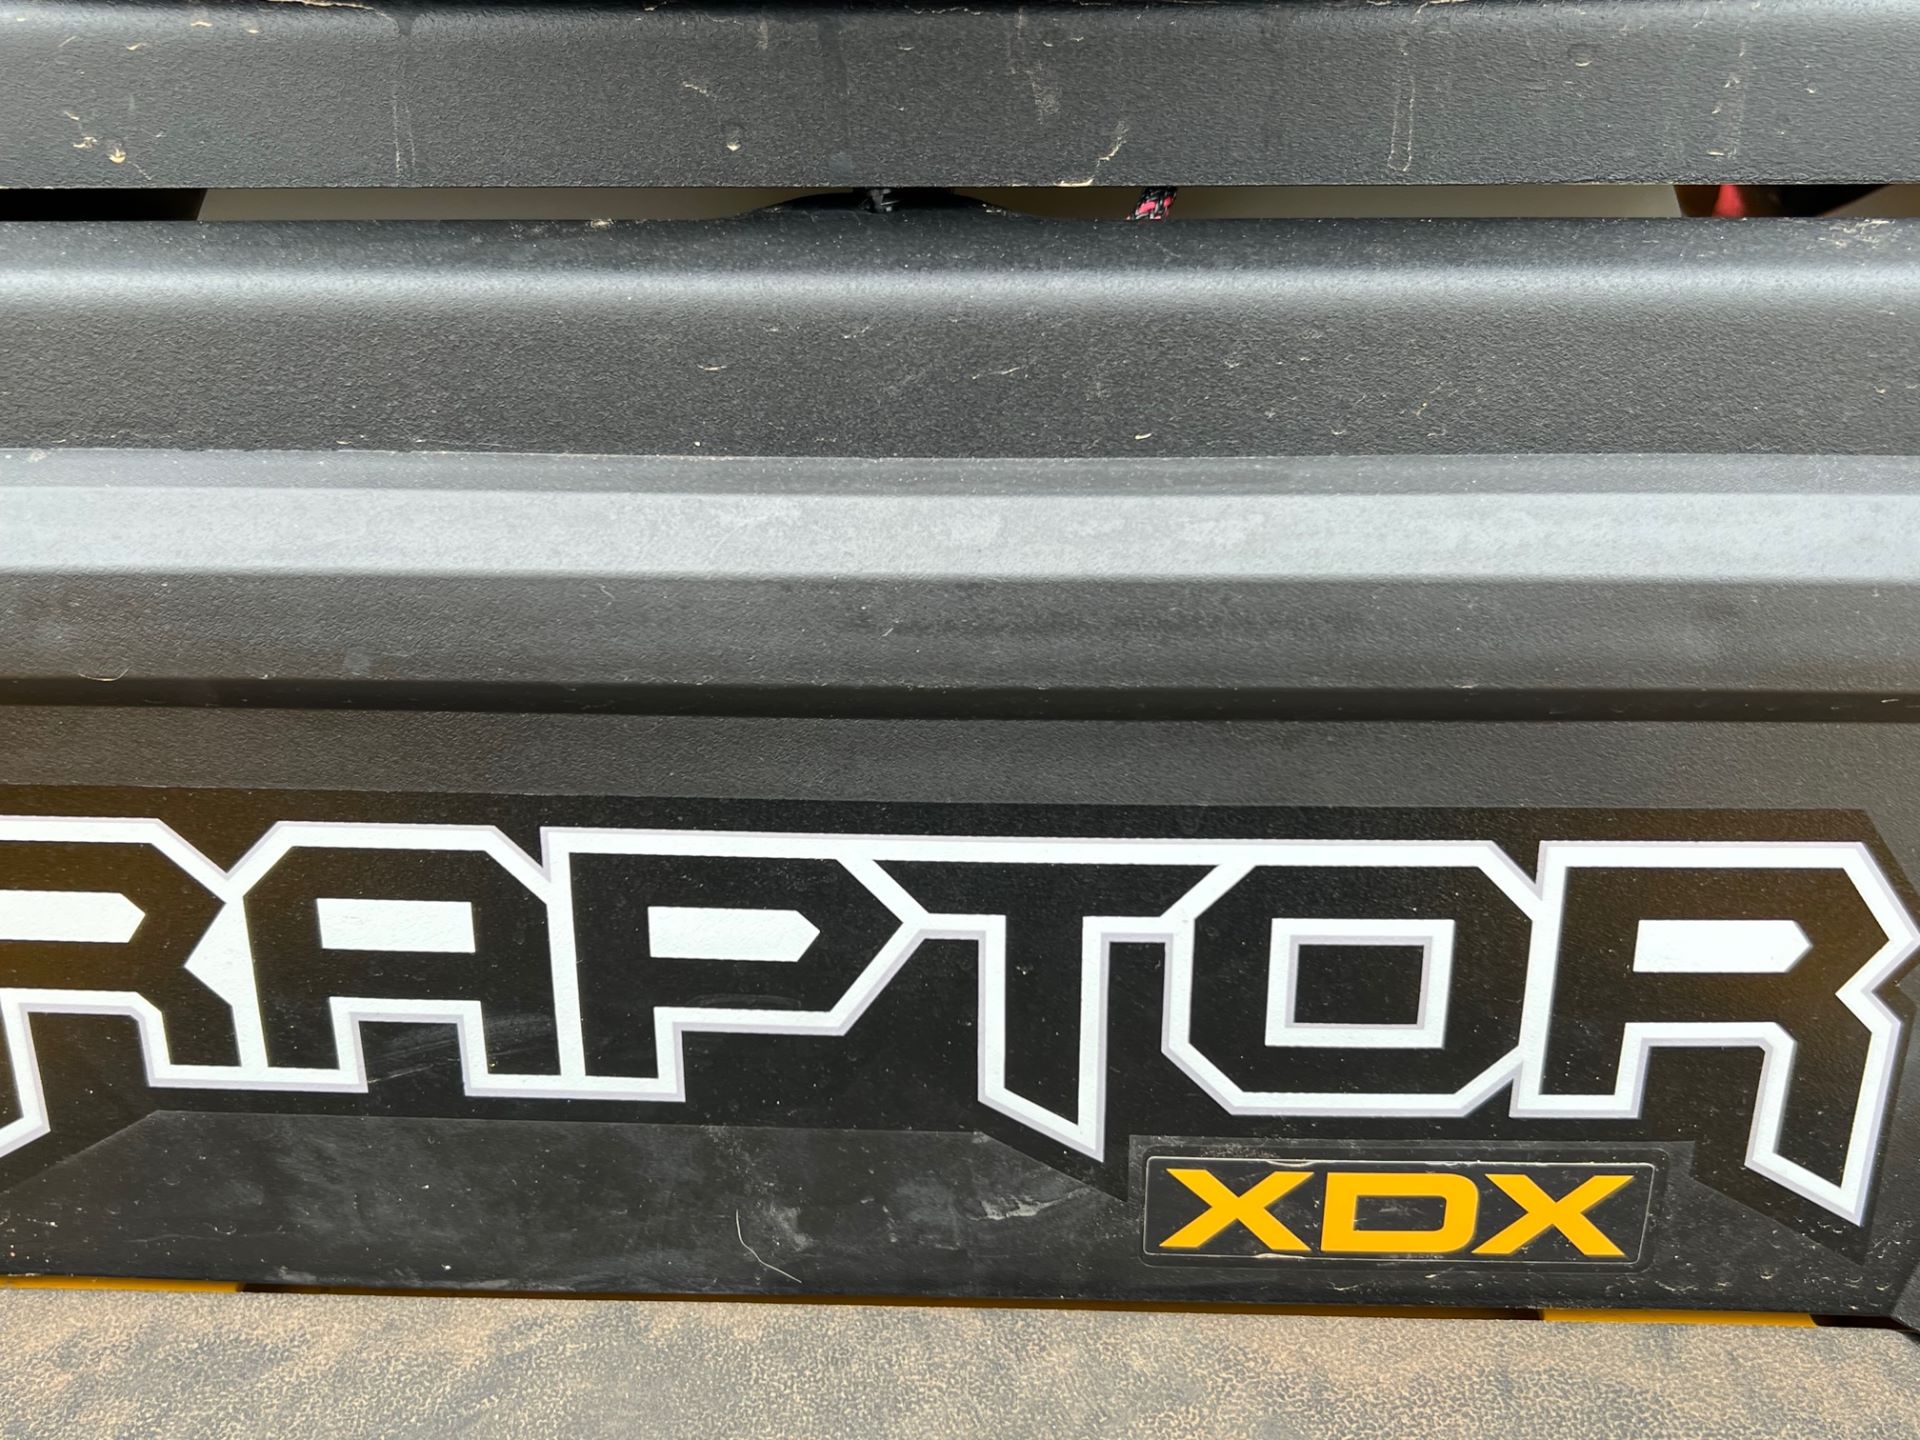 2023 Hustler Turf Equipment Raptor XDX 54 in. Kawasaki FR691 23 hp in Wichita Falls, Texas - Photo 2